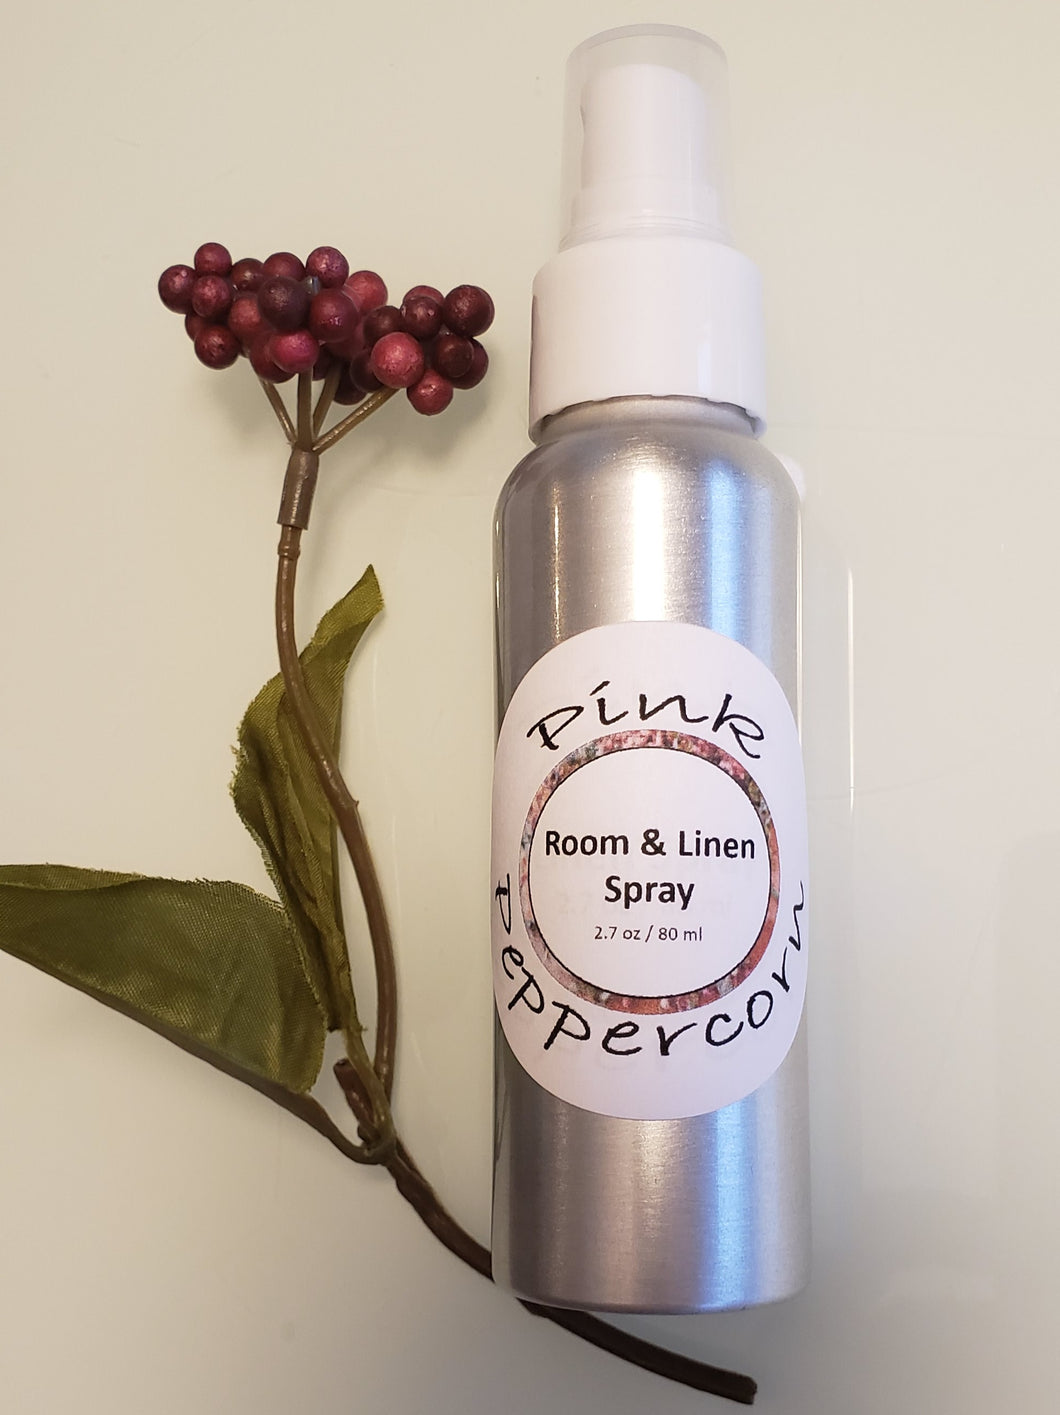 Room & Linen Spray - 2.7oz / 80 ml